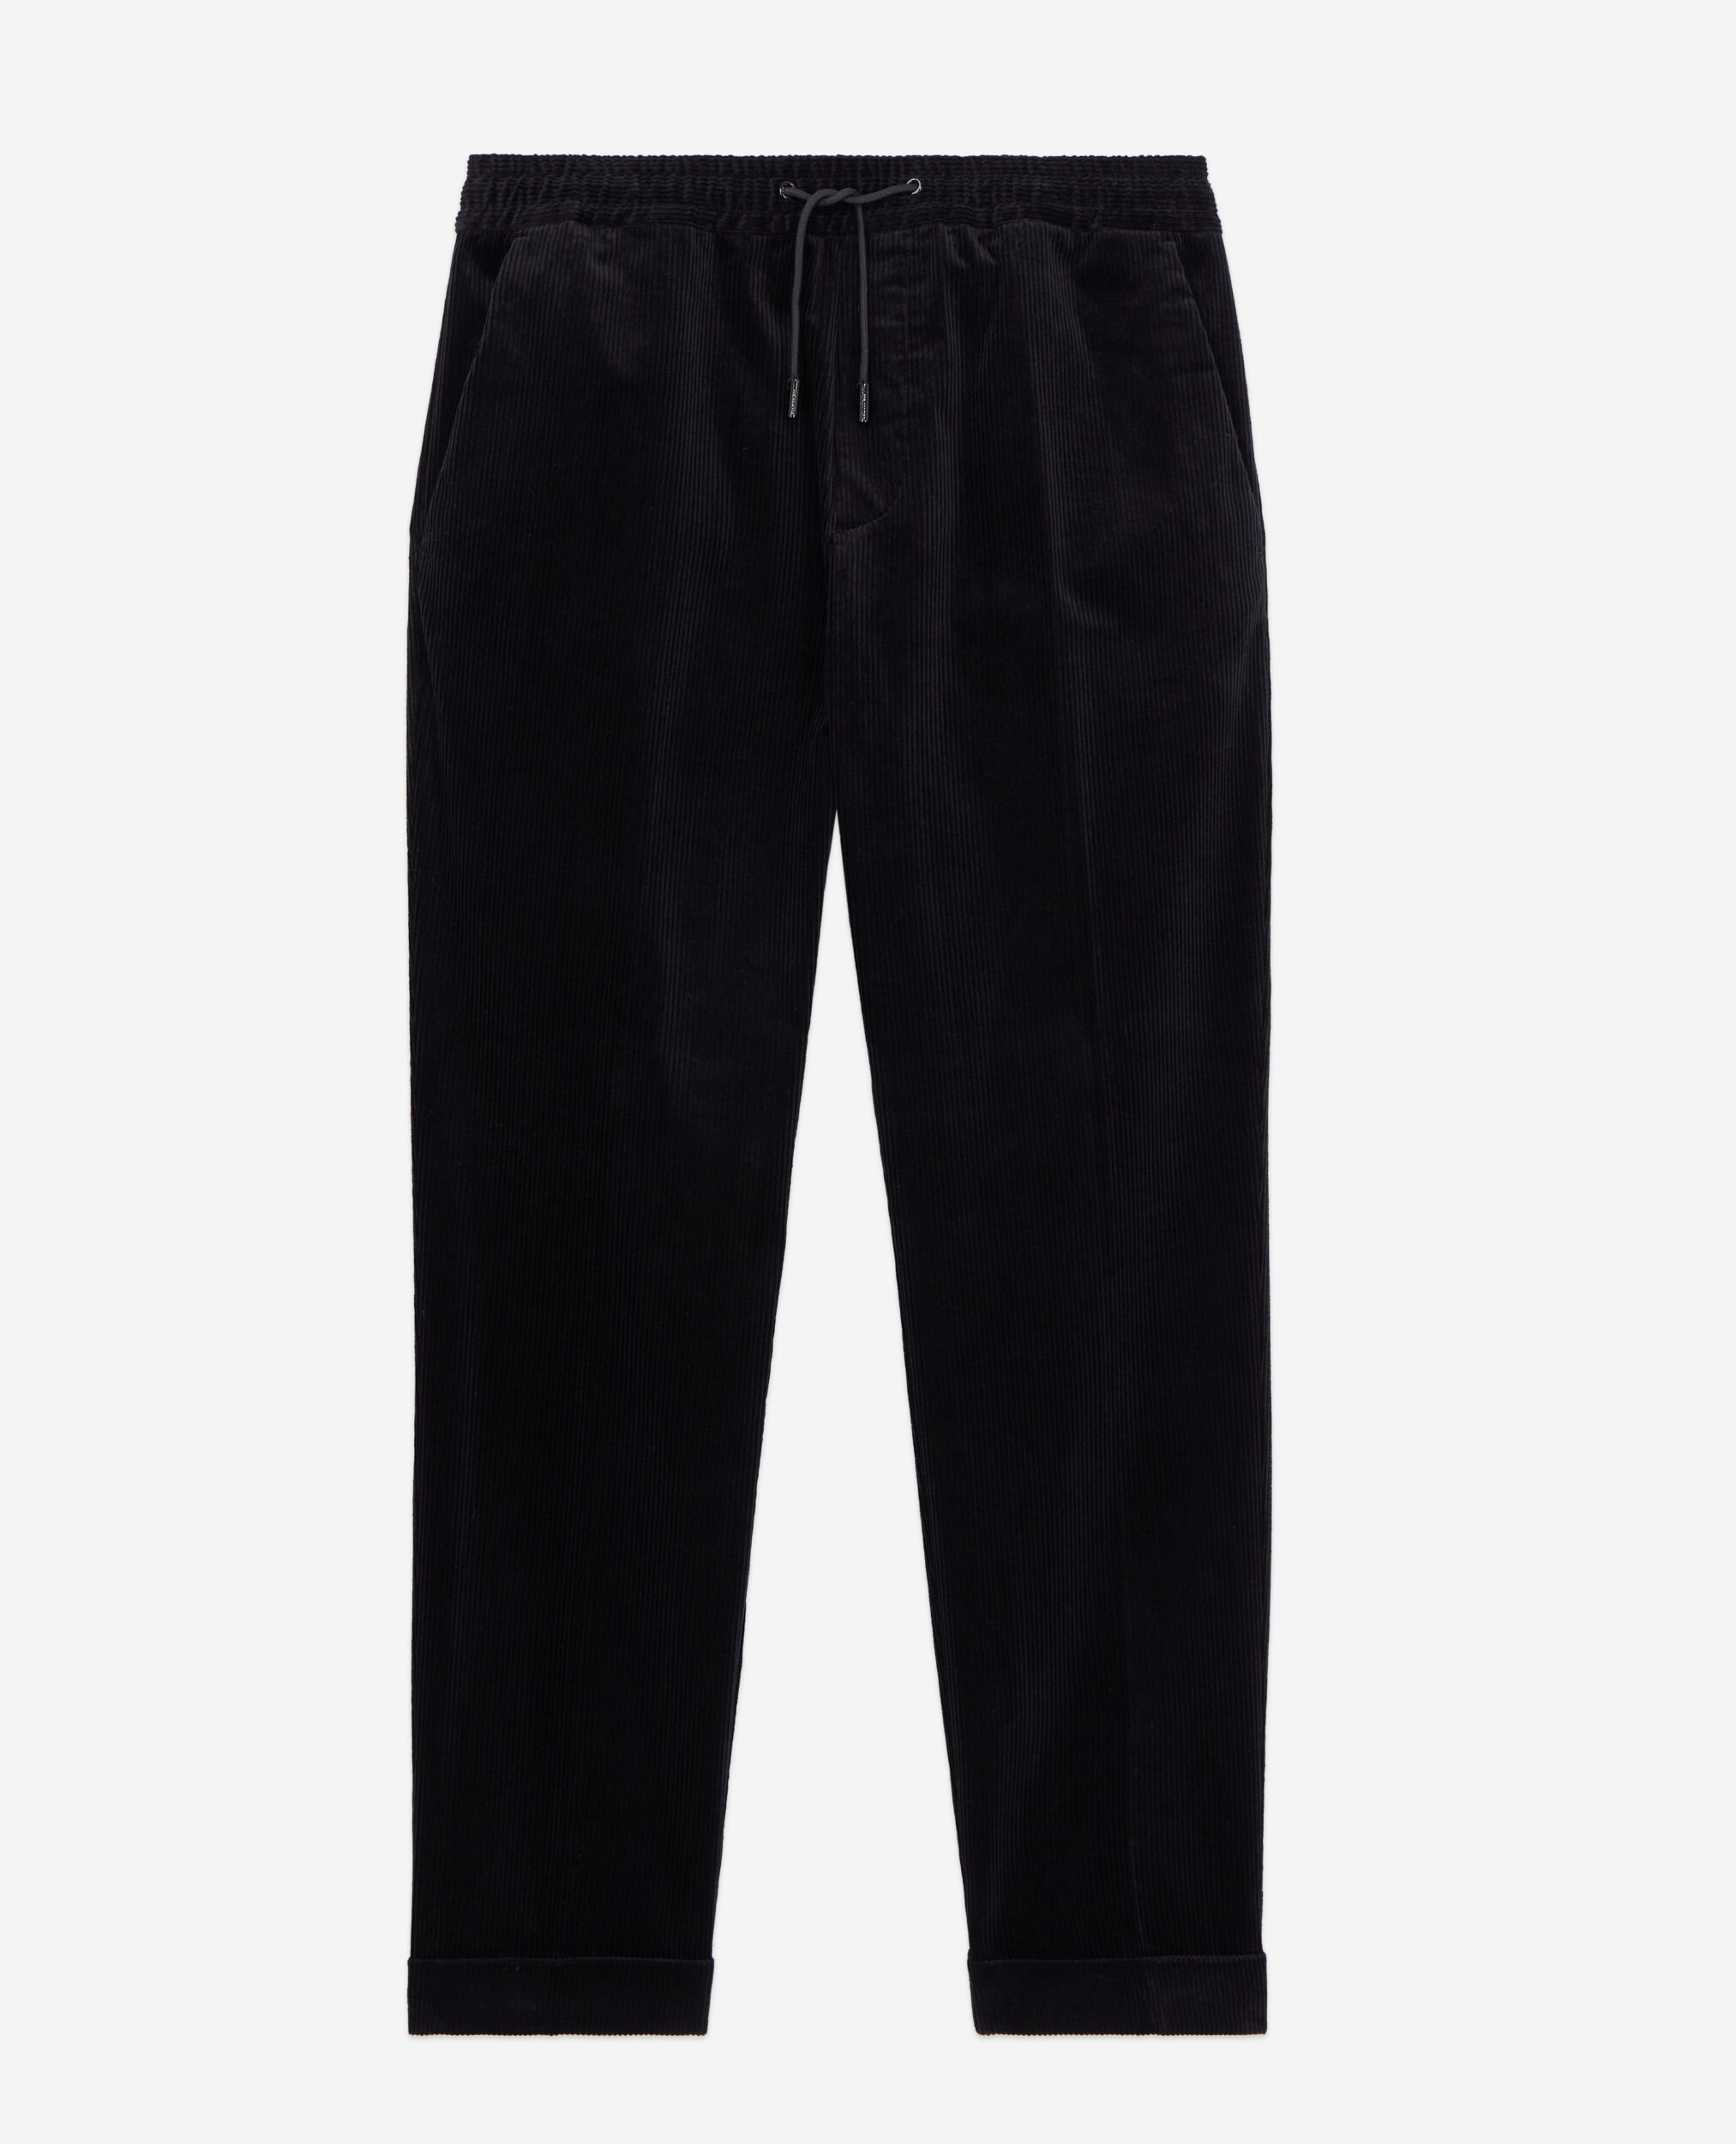 Black corduroy trousers, BLACK, hi-res image number null